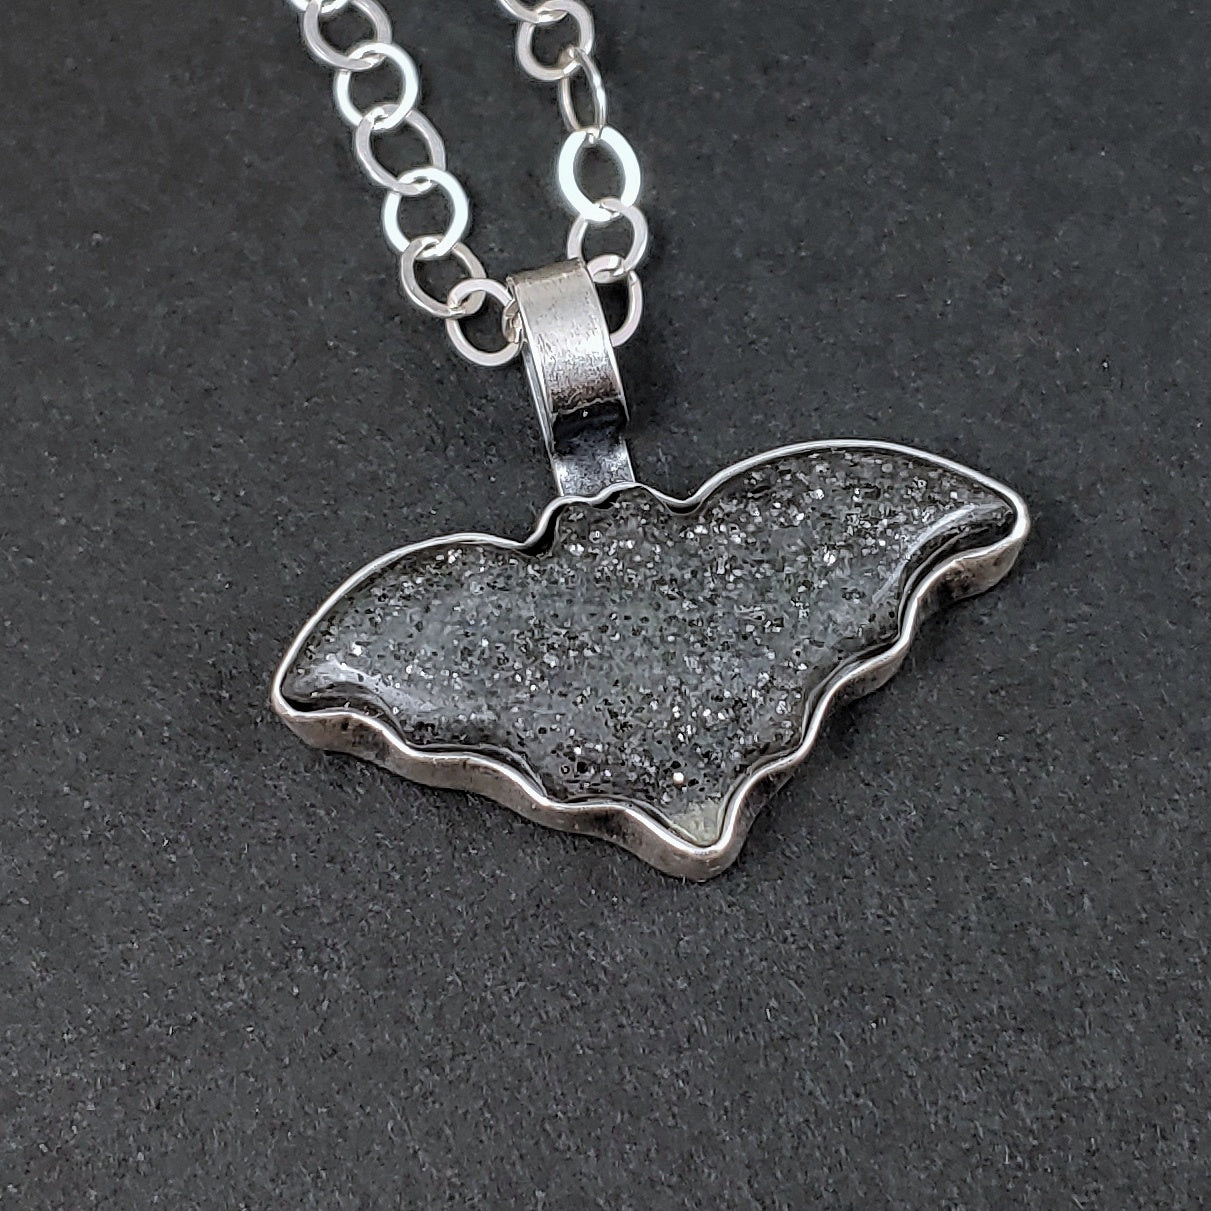 Midnight quartzite bat necklace on a black background.